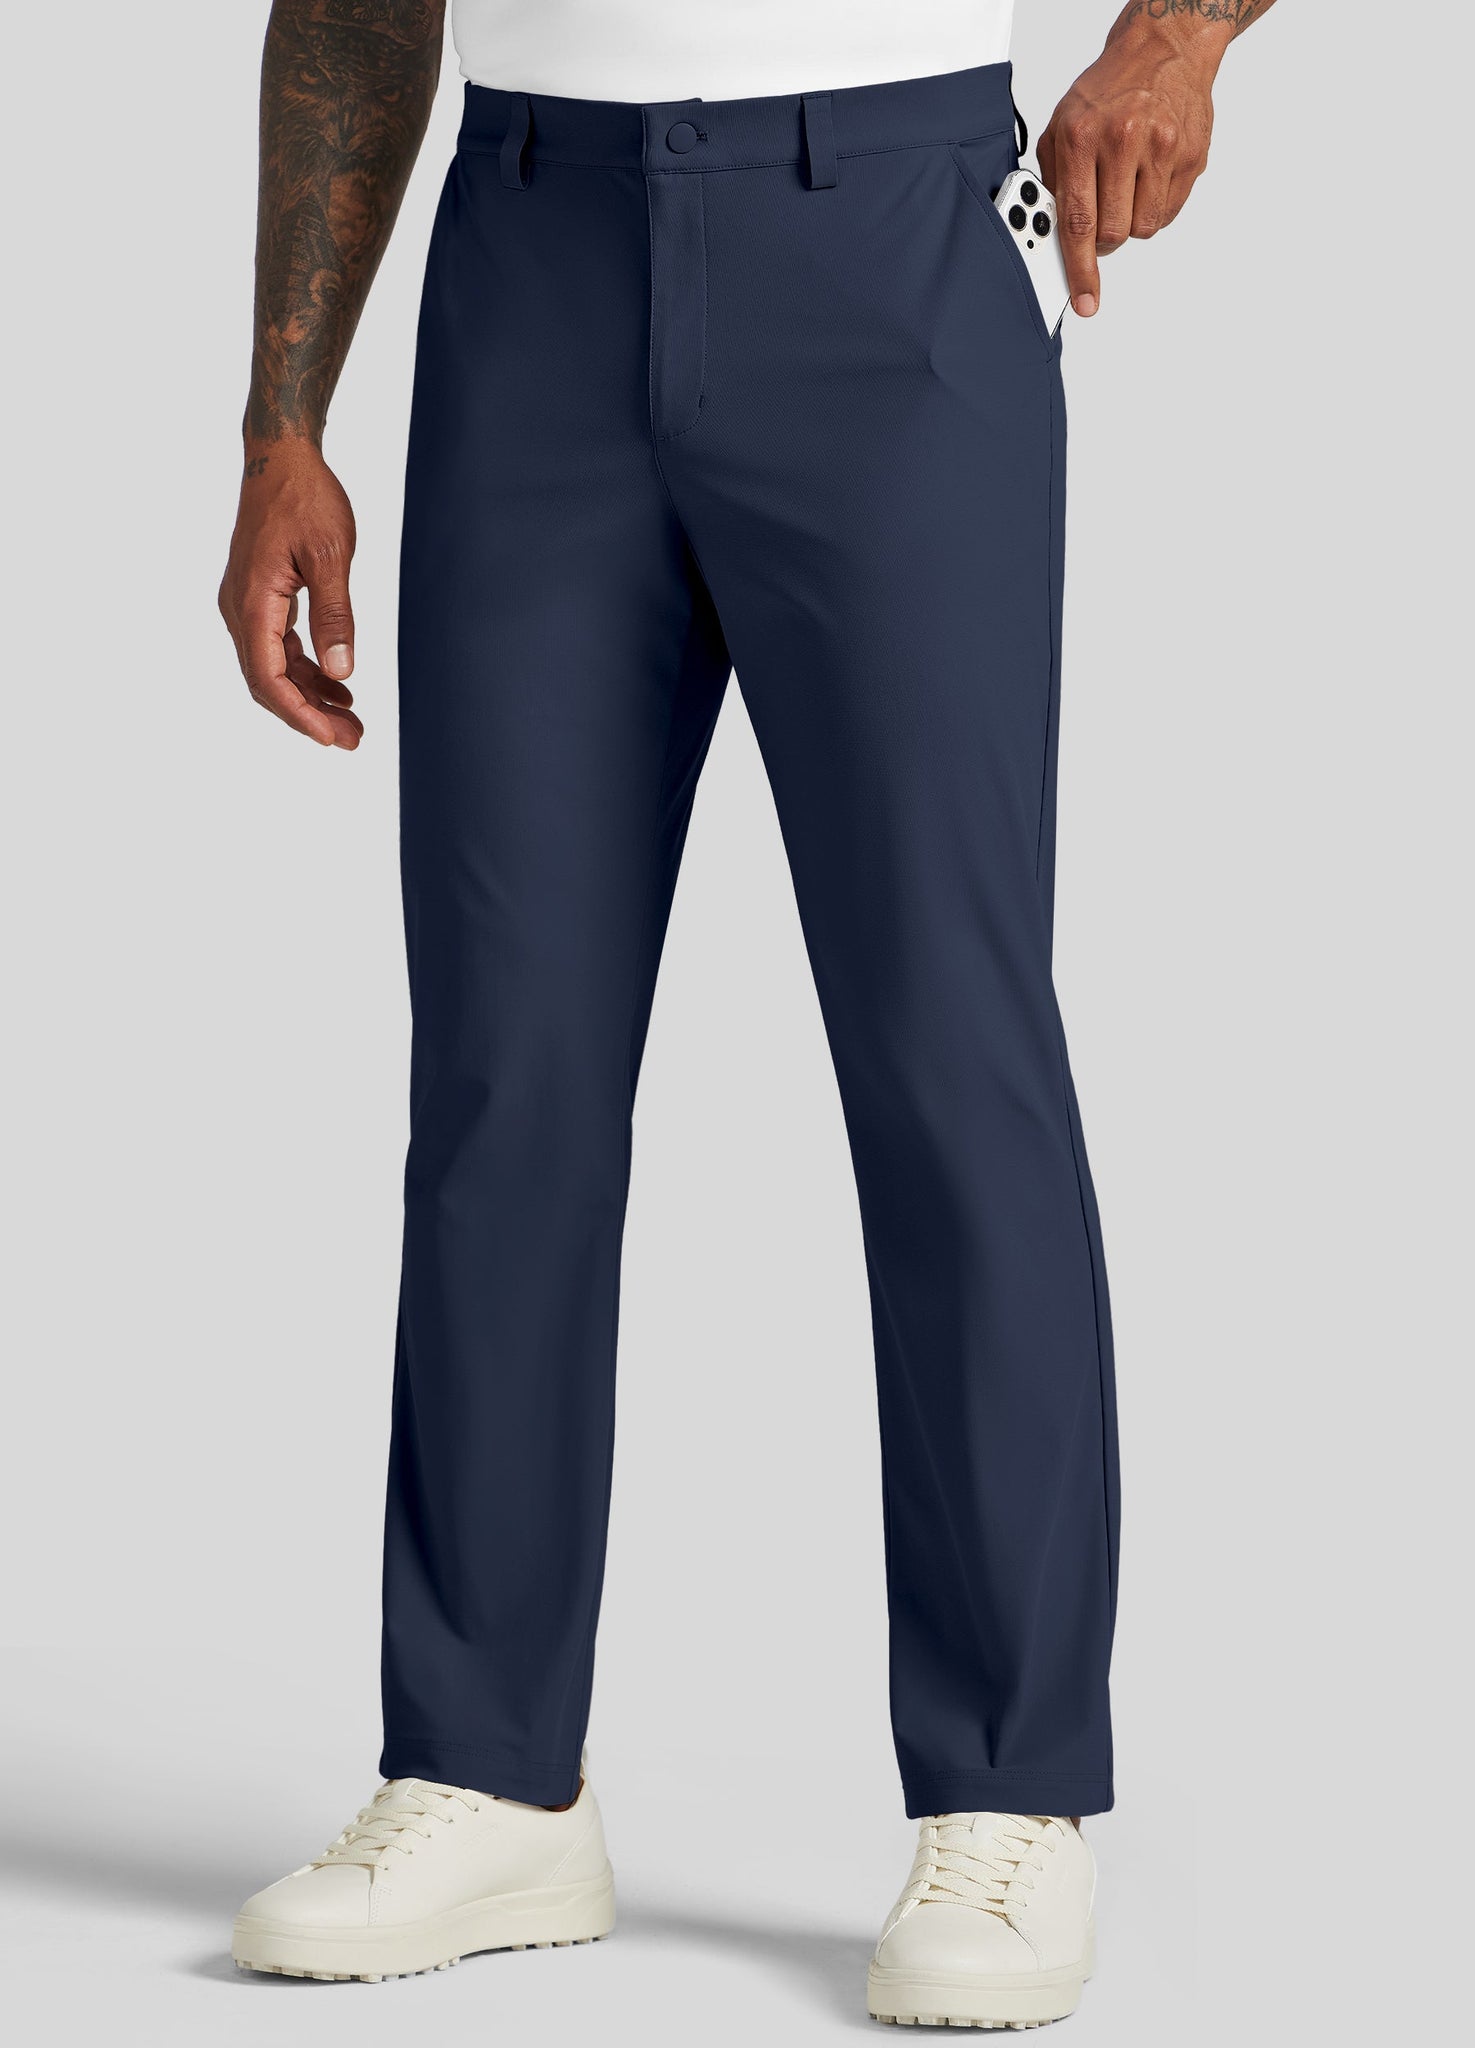 Men's Slim-Fit Golf Dress Pants